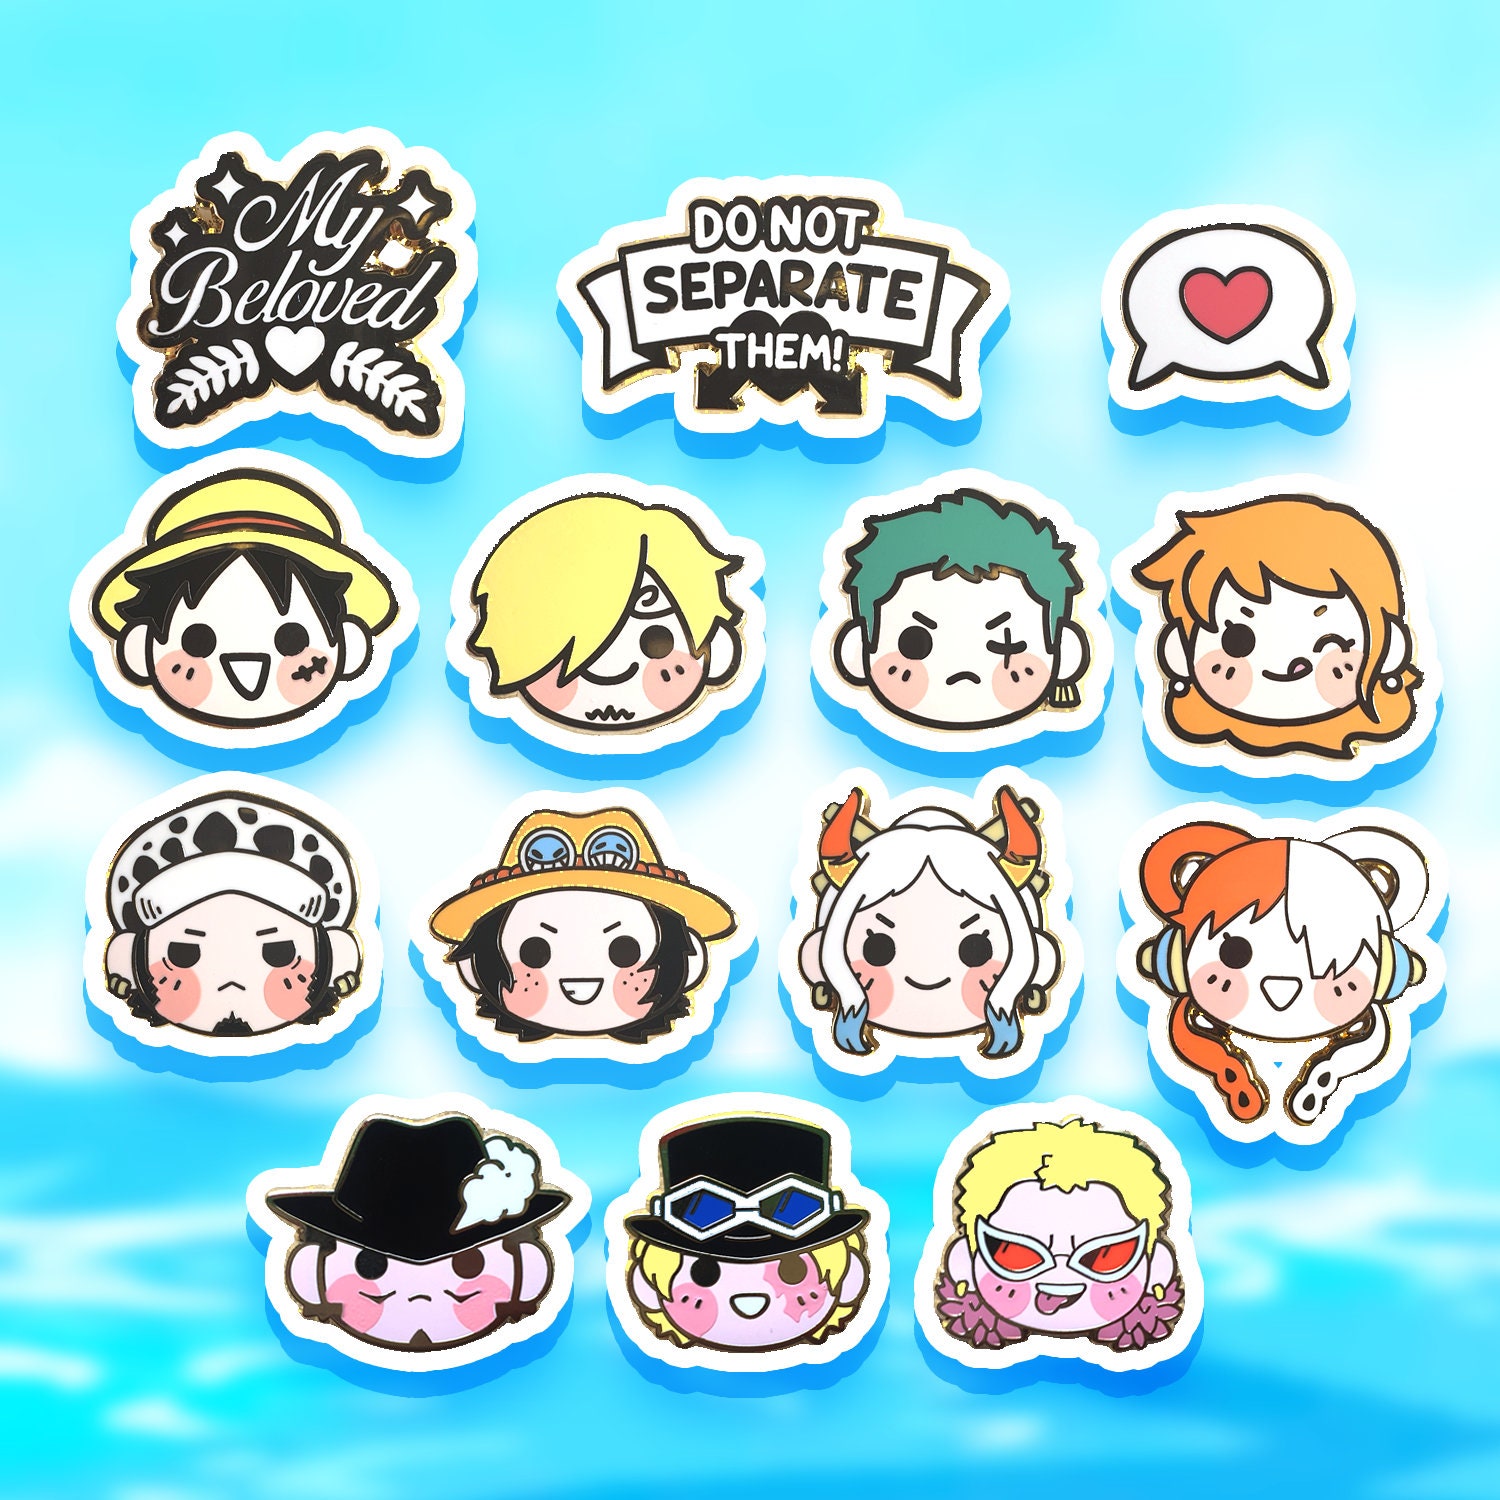 One Piece Roronoa Zoro 639.png One Piece - Roronoa Zoro  Sticker for Sale  by JacklyBrekked